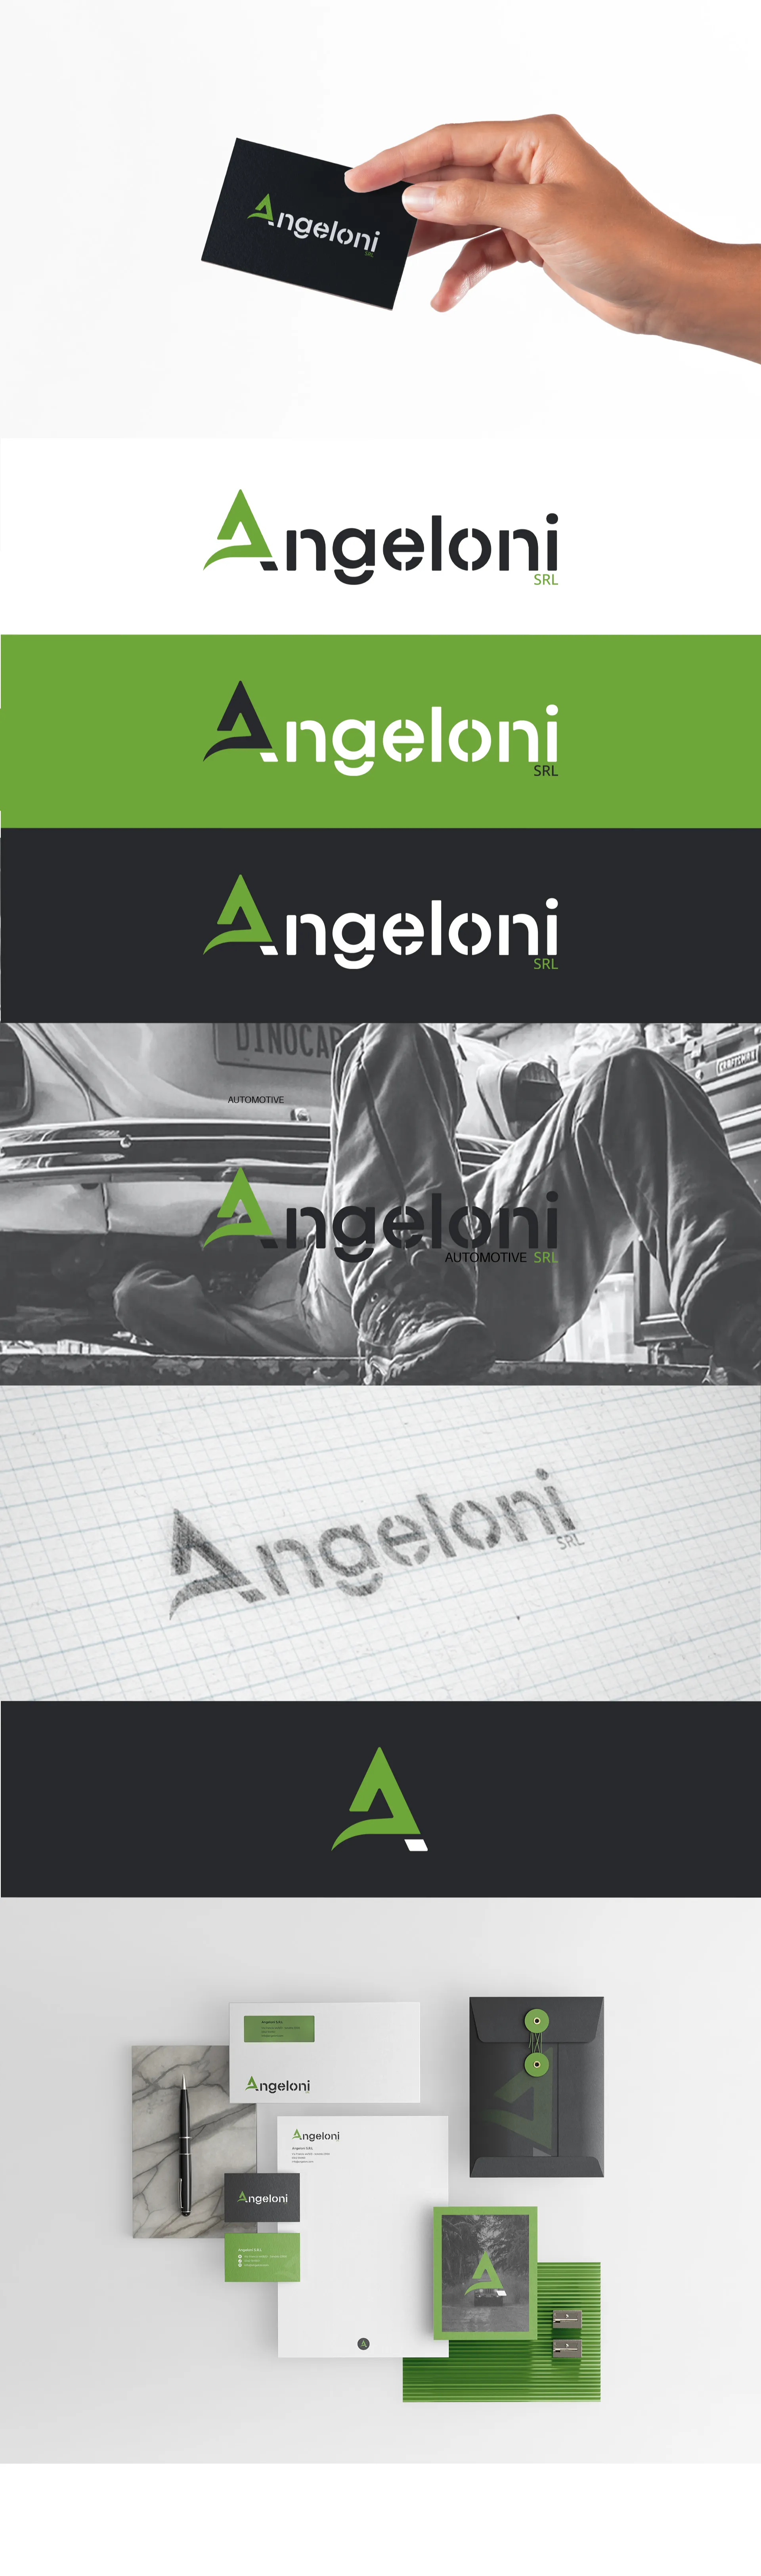 Angeloni Detail